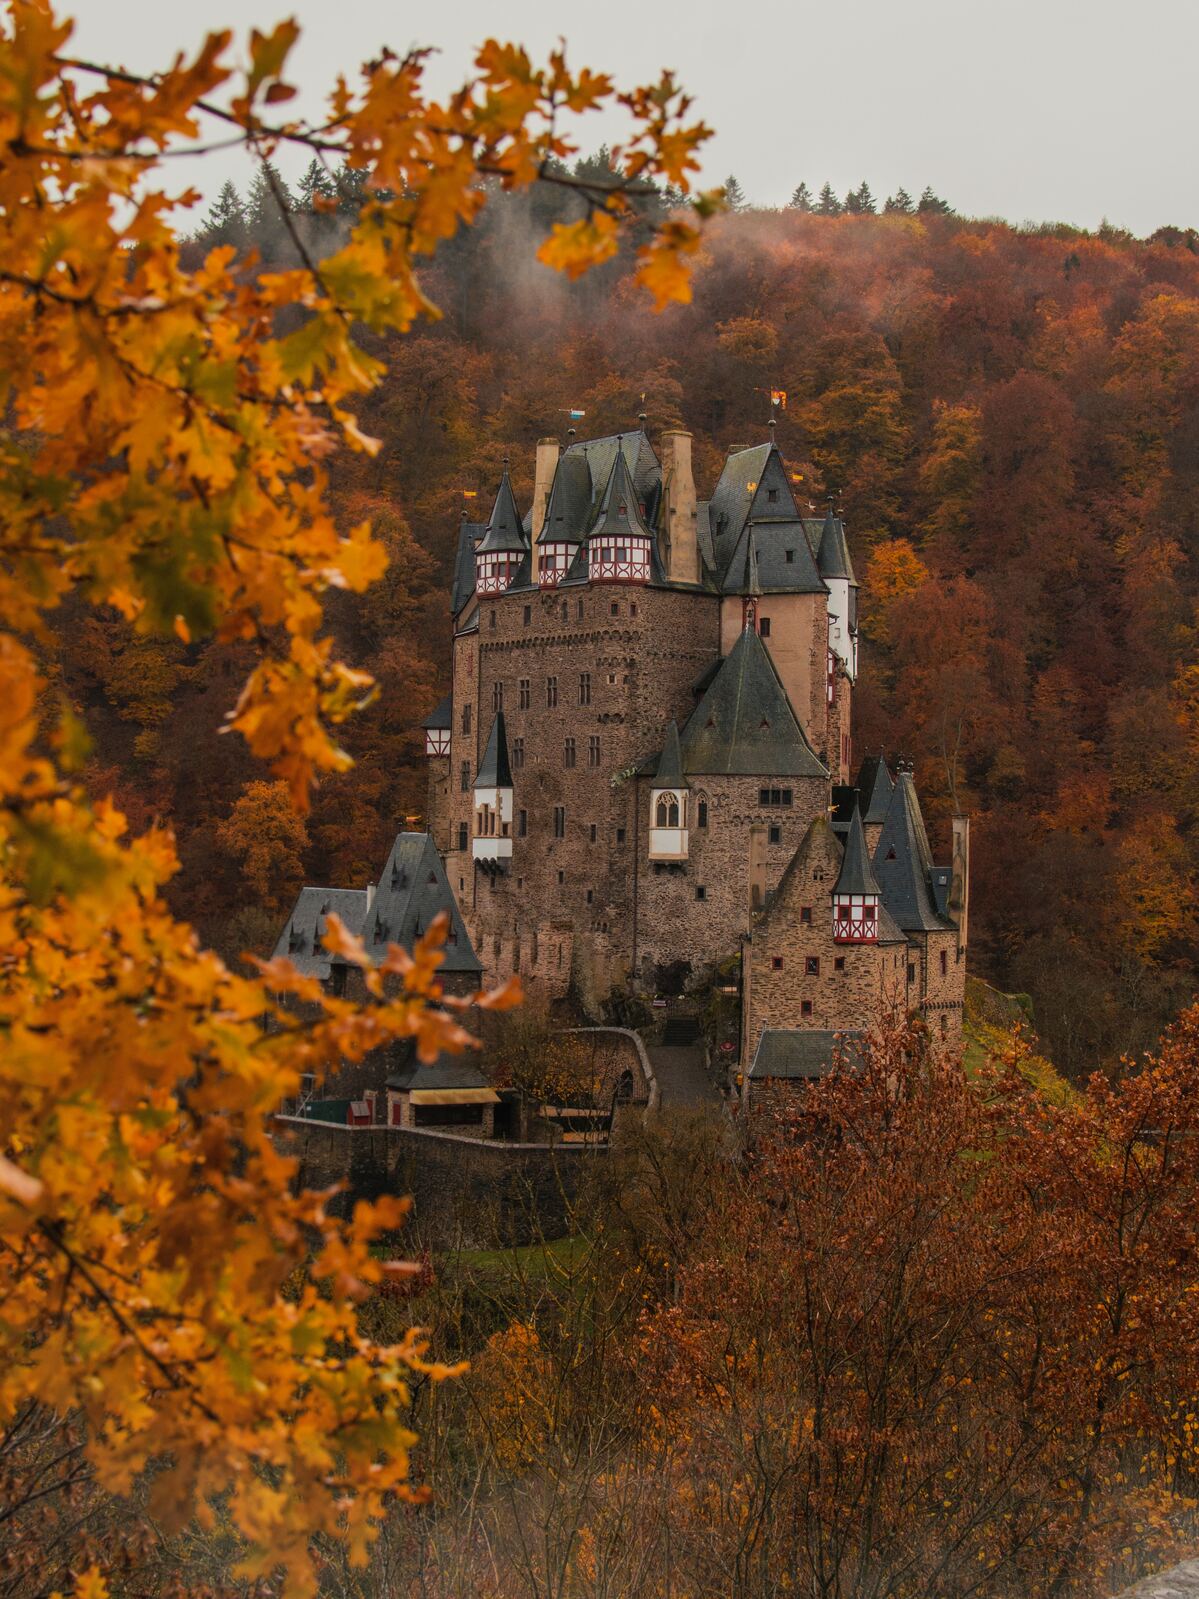 Image of Burg Eltz by Team PhotoHound